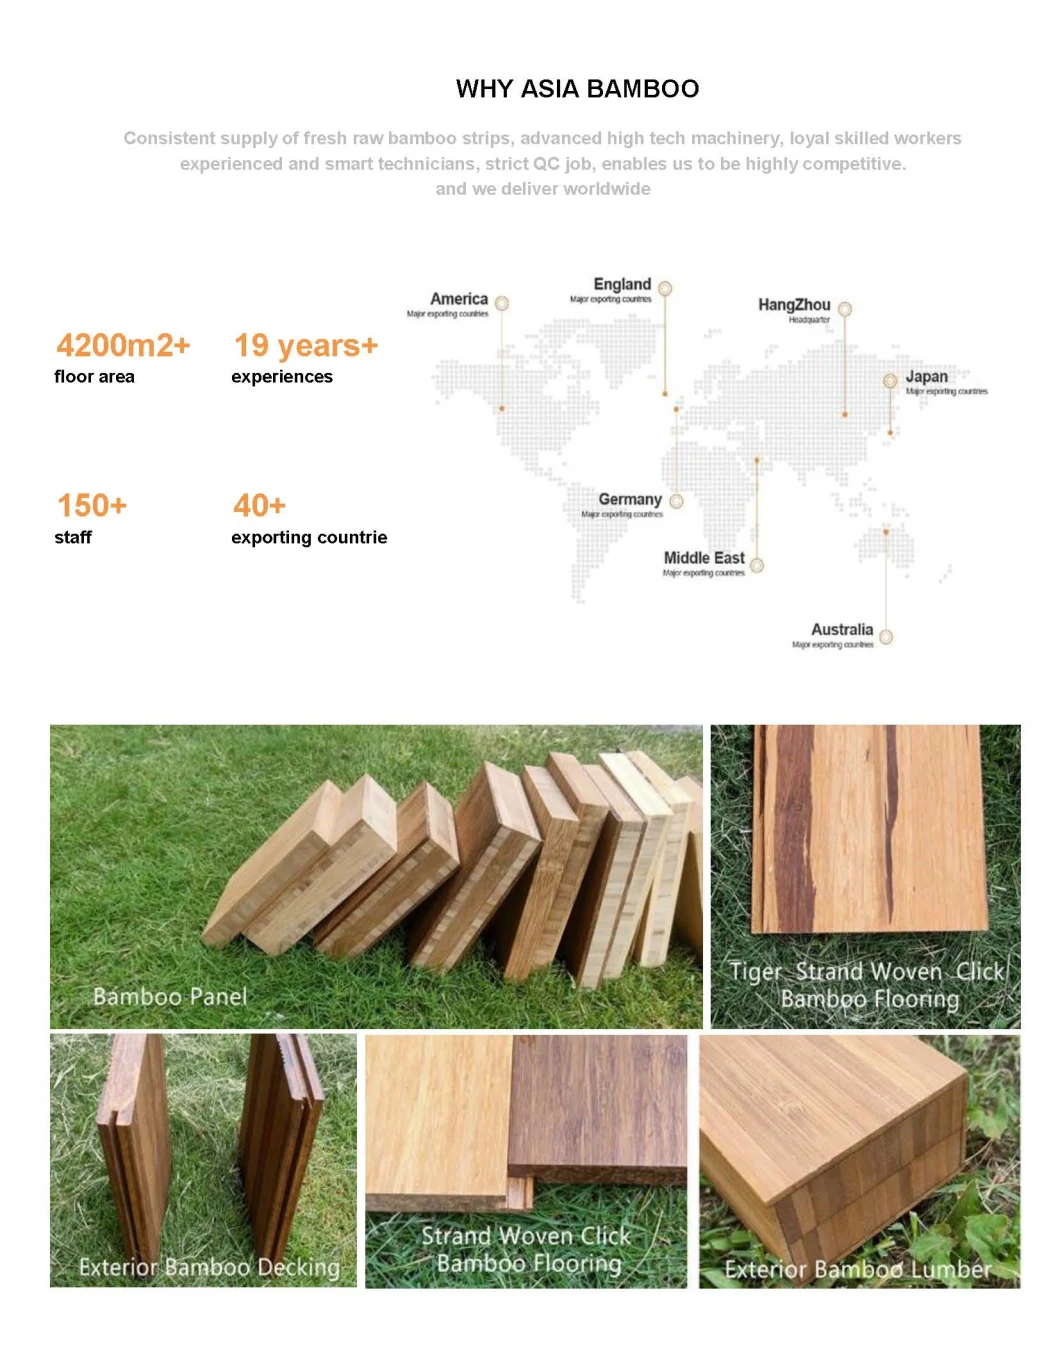 2440X1220X40mm Caramel Vertical Cross Ply Bamboo Furniture Boards, Bamboo Panels, Laminated Bamboo Ply Sheets